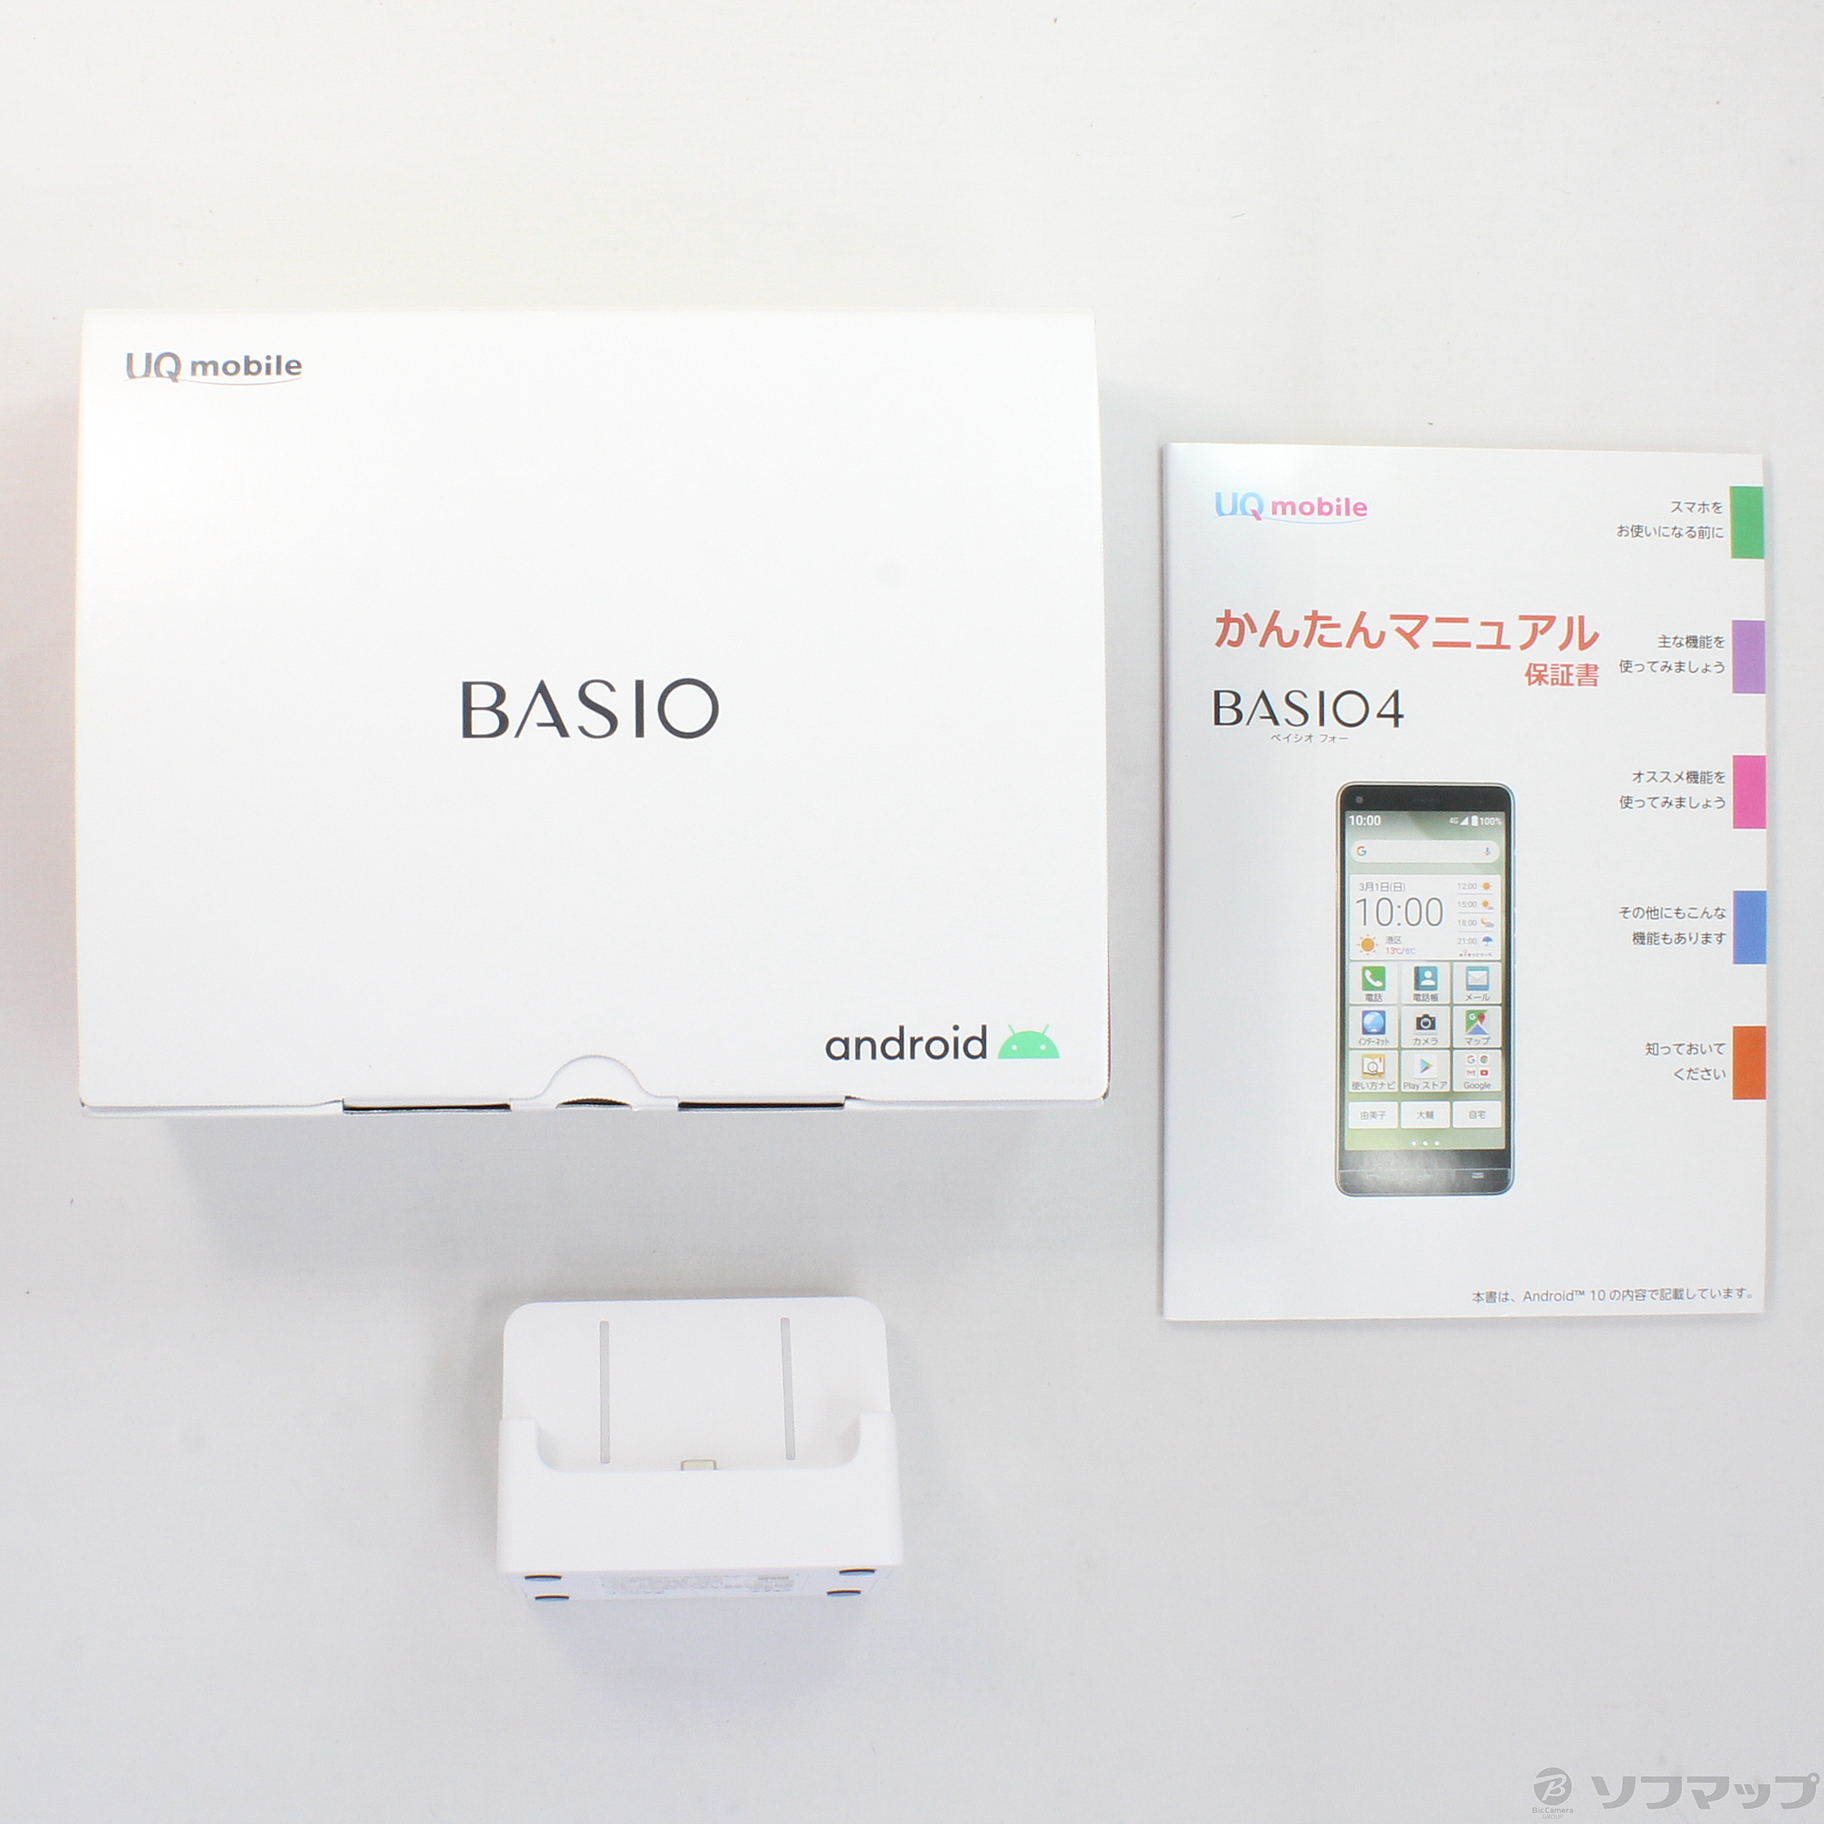 BASIO4 32GB ワインレッド KYV47SRU UQ mobile